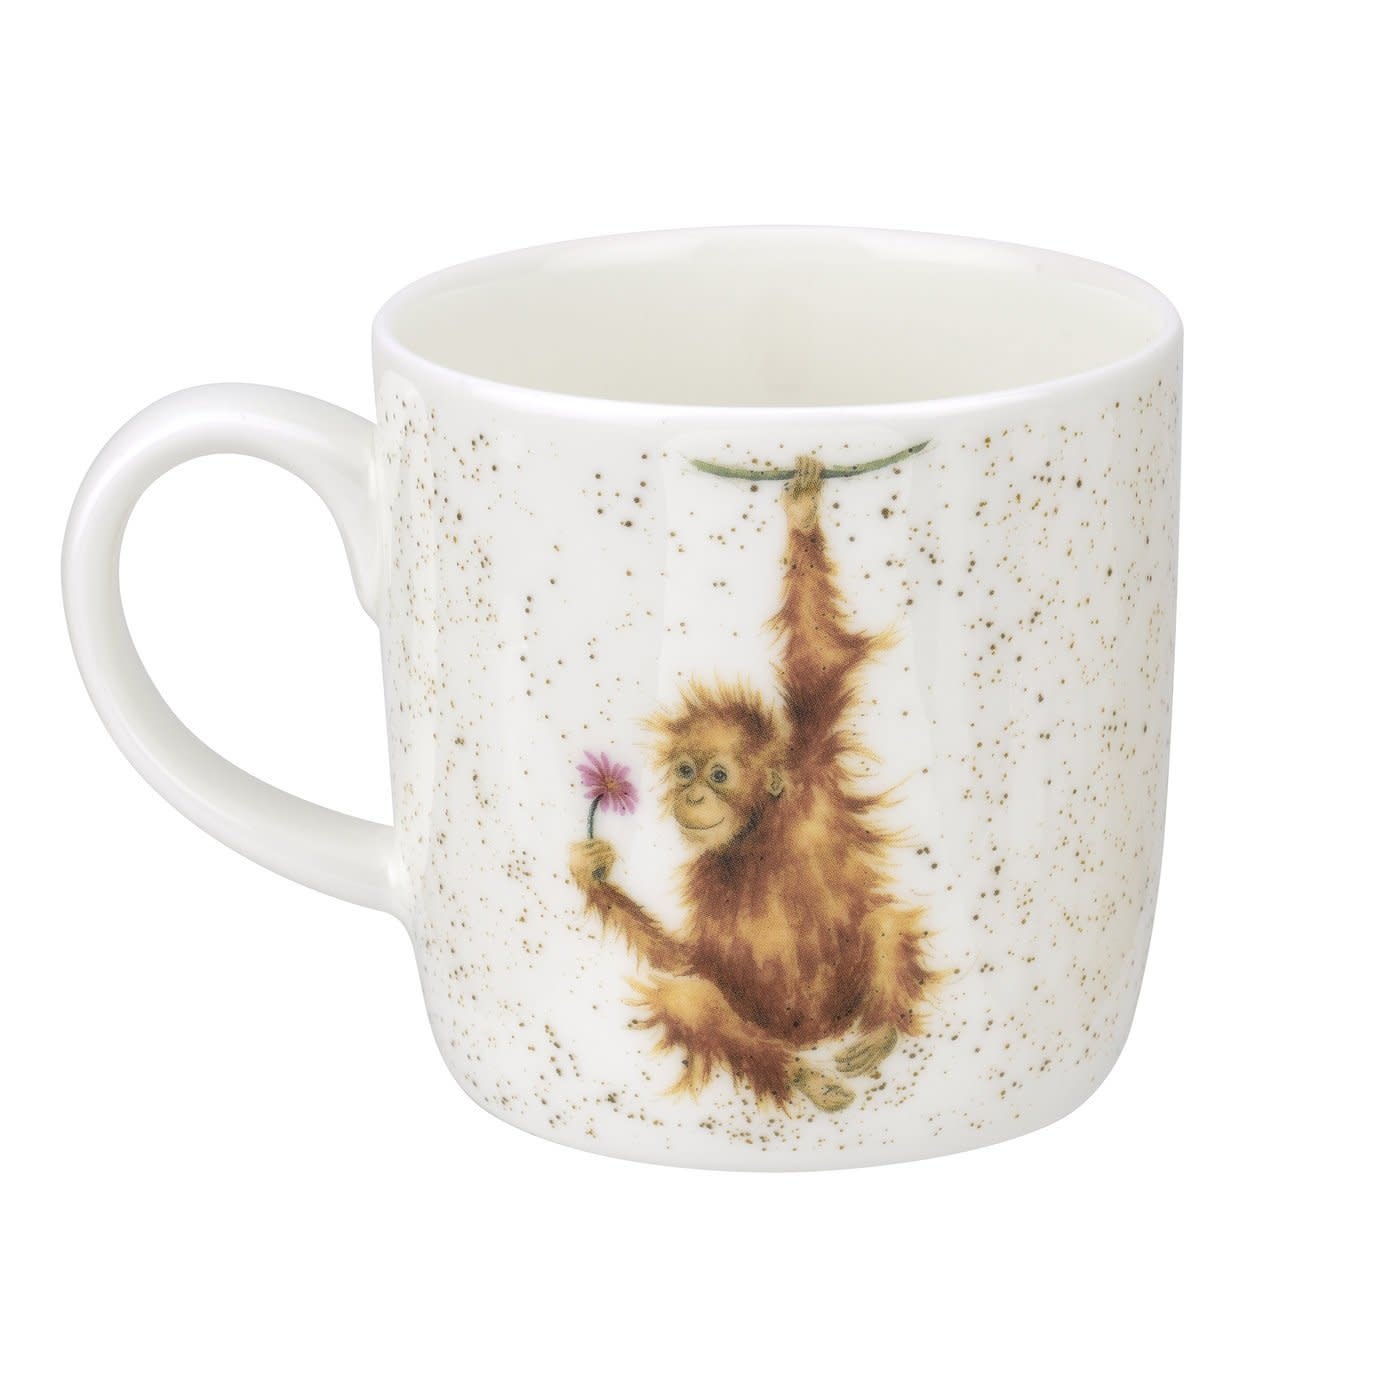 Wrendale Designs 'Orangutangle' Mug